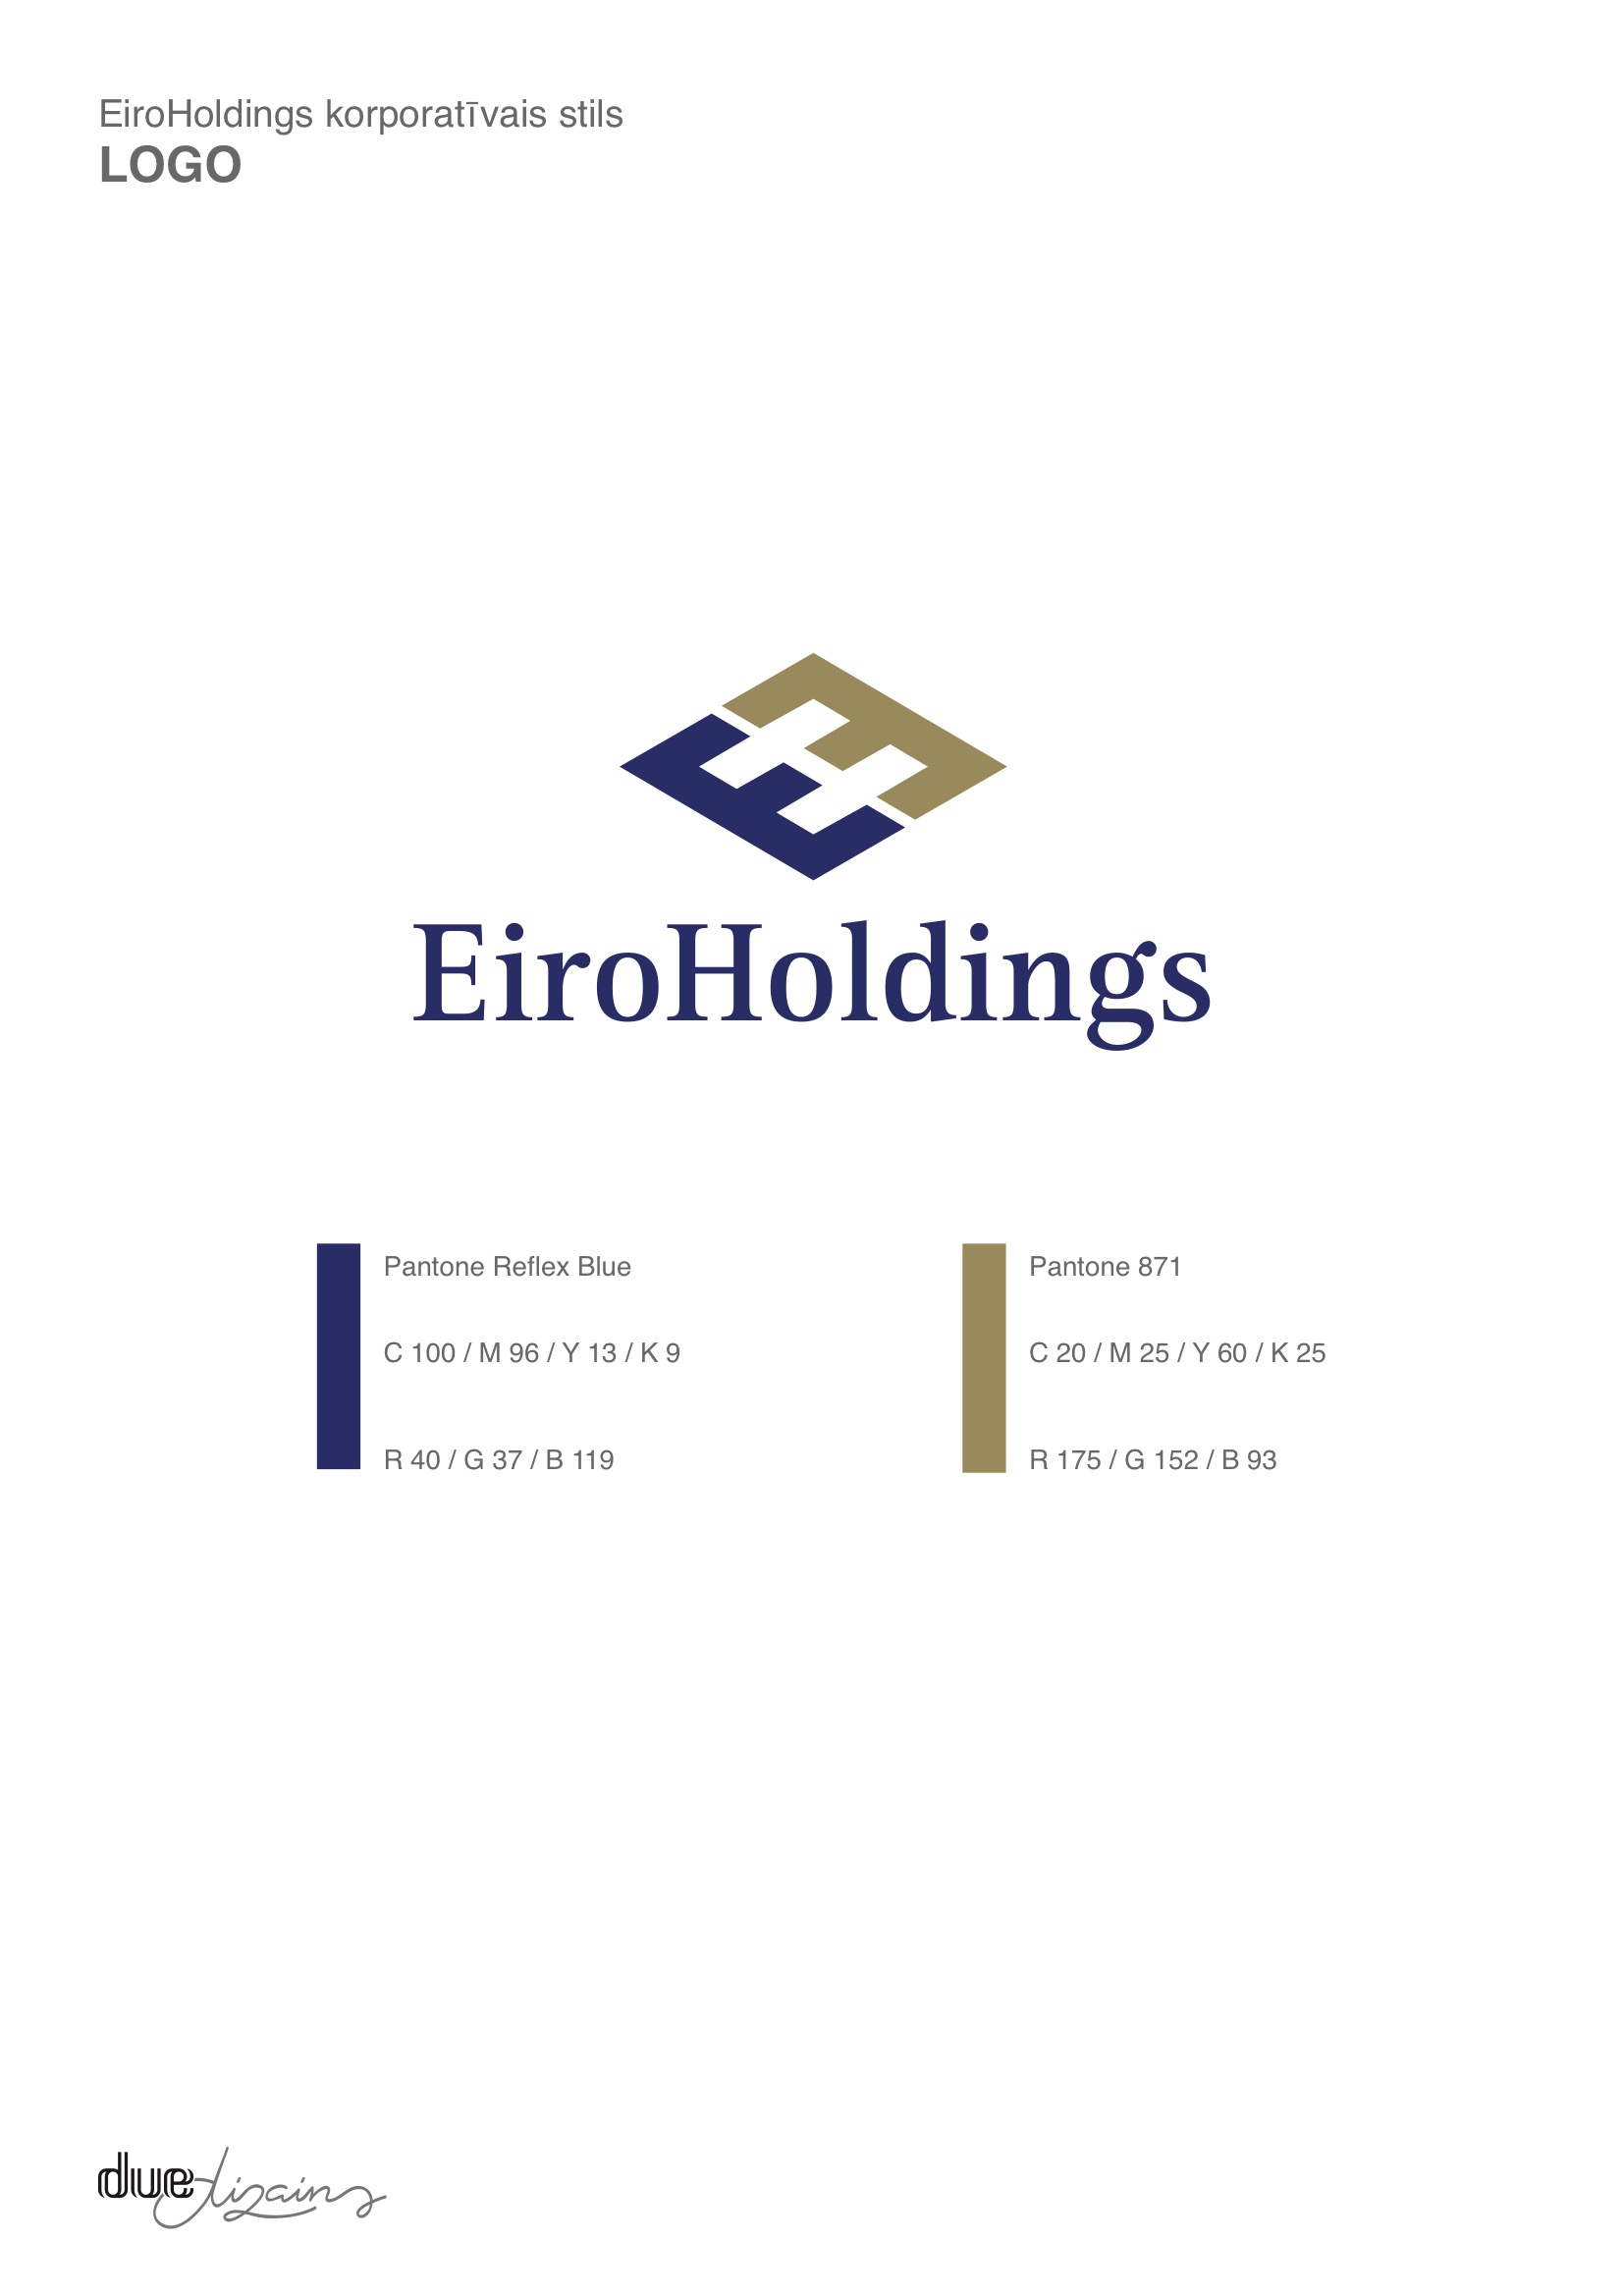 Eiroholdings_logo_guidelines 1